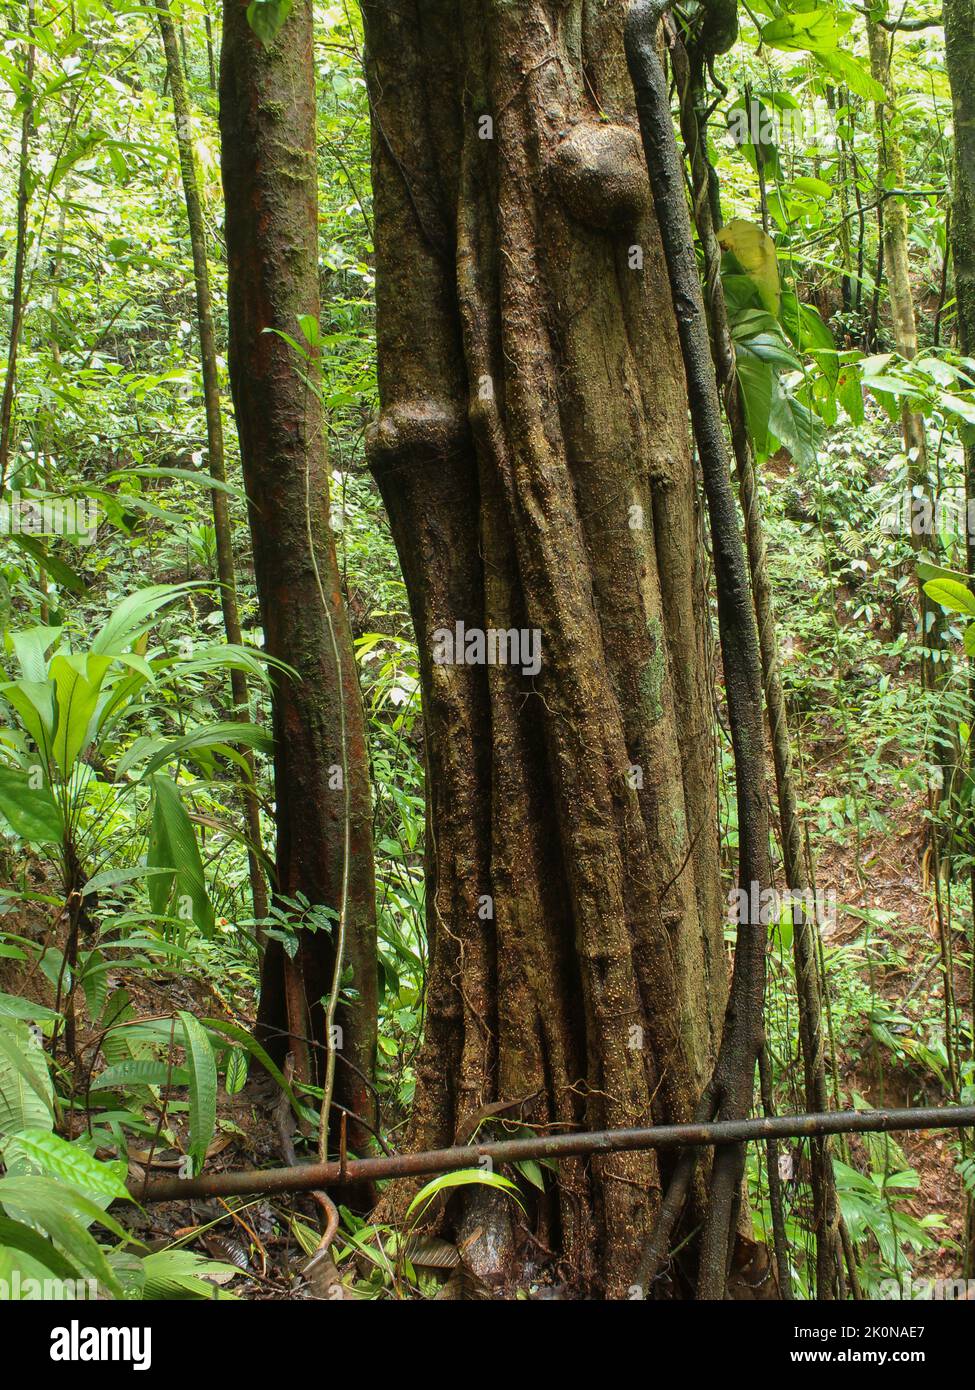 Canelillo tree (Pleondeodron costaricense) in the forest Stock Photo